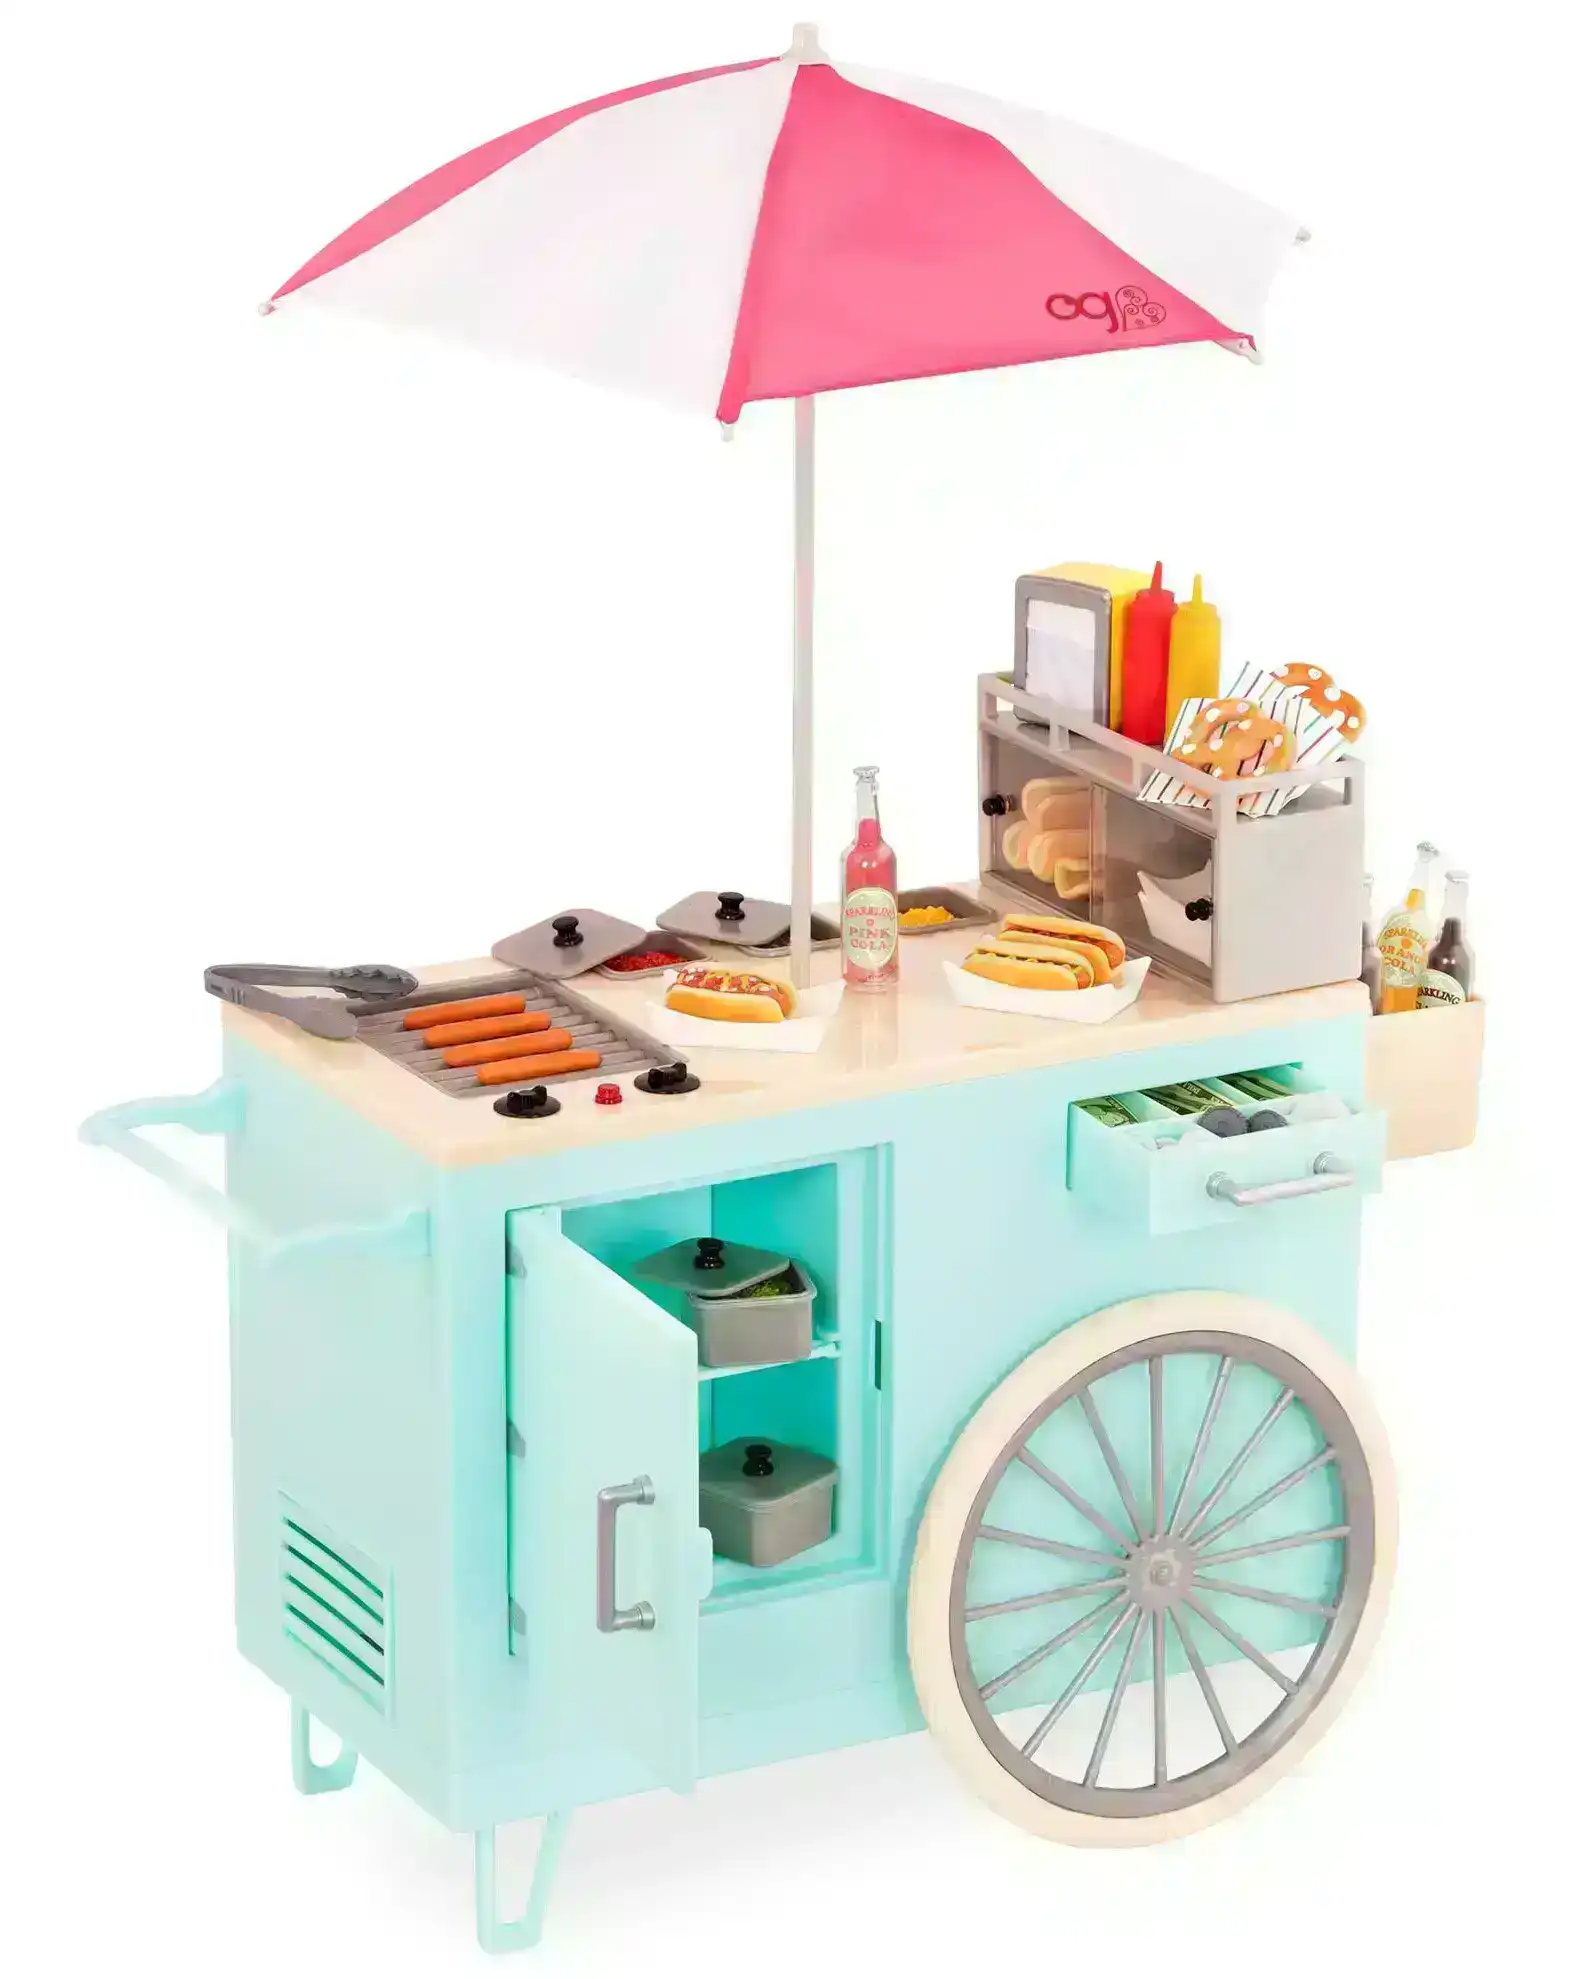 Our Generation Retro Hot Dog Cart